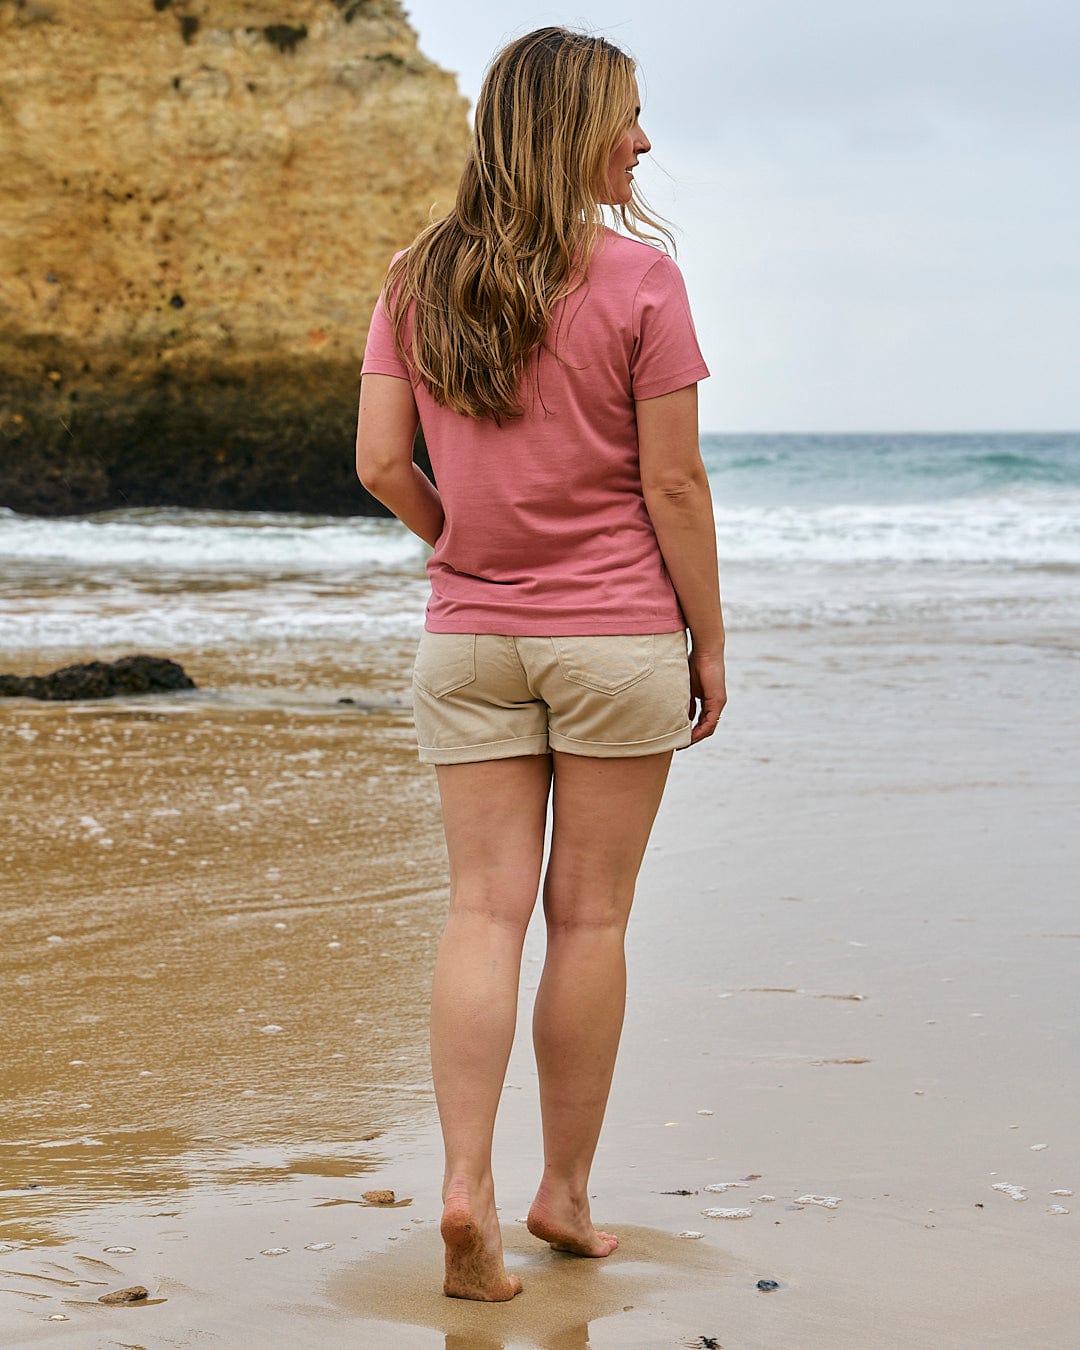 A woman standing on a beach wearing a Saltrock Love Your Ocean - Womens Short Sleeve T-Shirt - Mid Pink shirt and tan shorts.